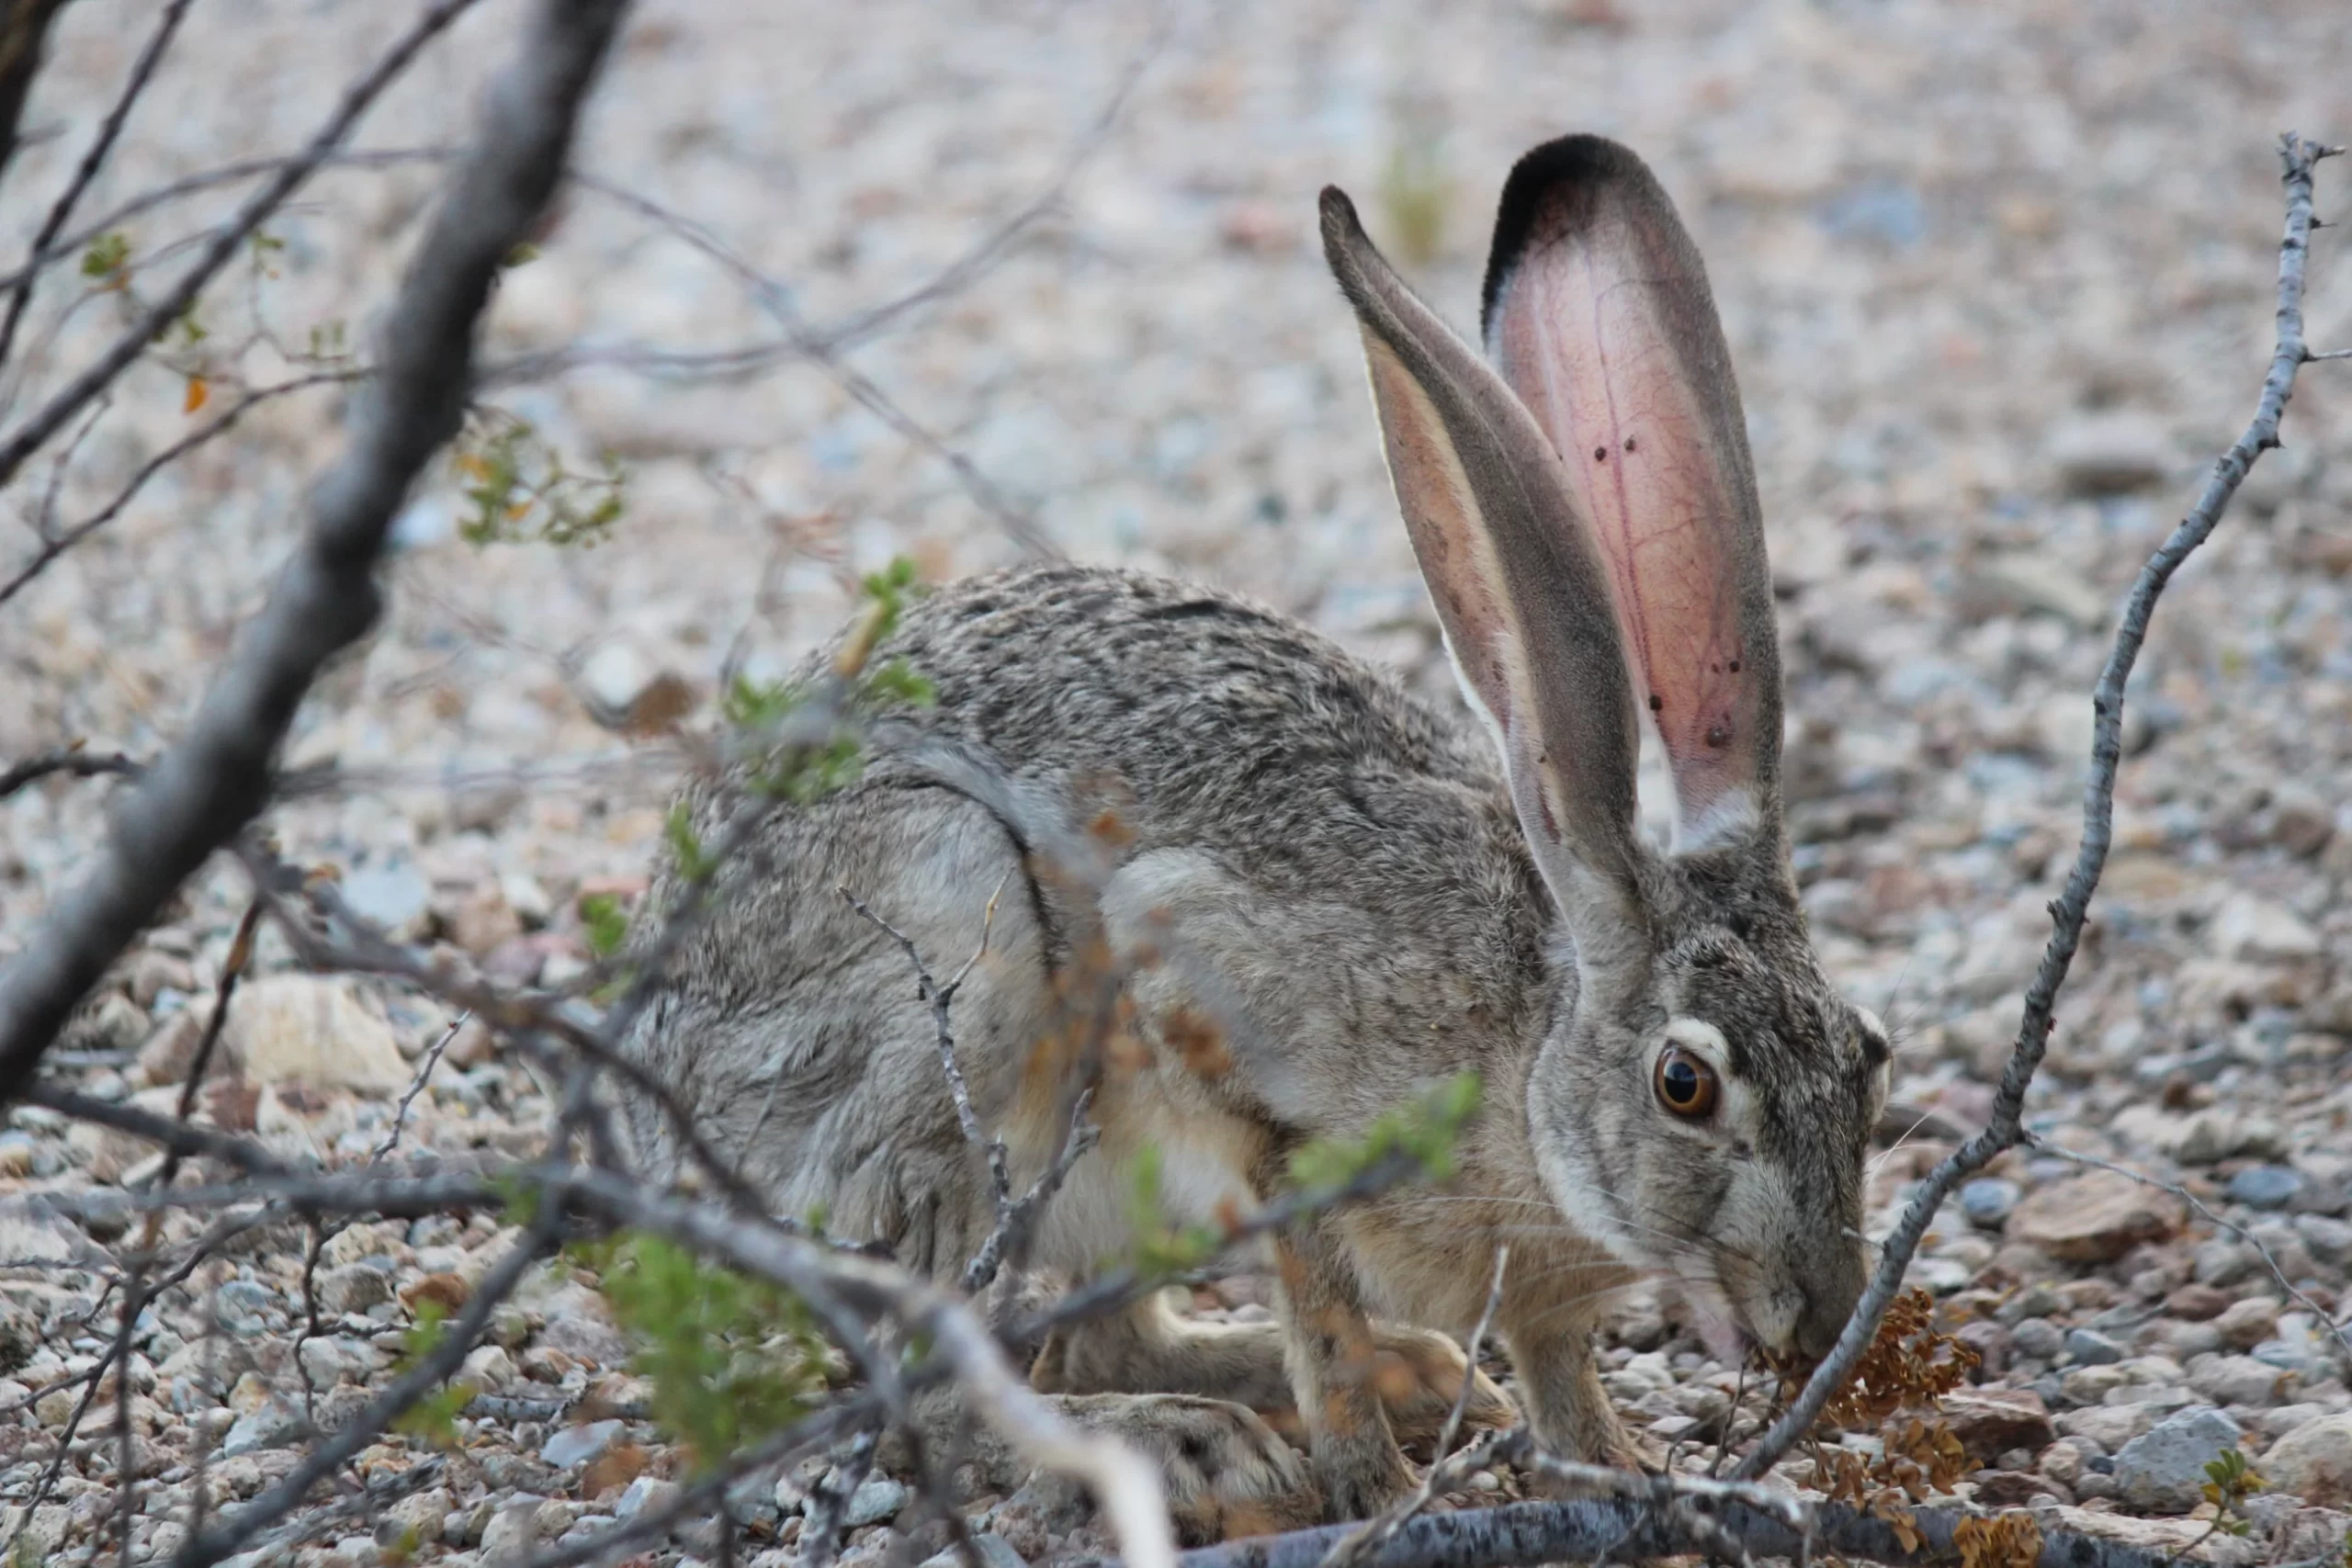 WIld Jack Rabbit Hare captured image in Terlingua Texas by Stacey Vandergriff